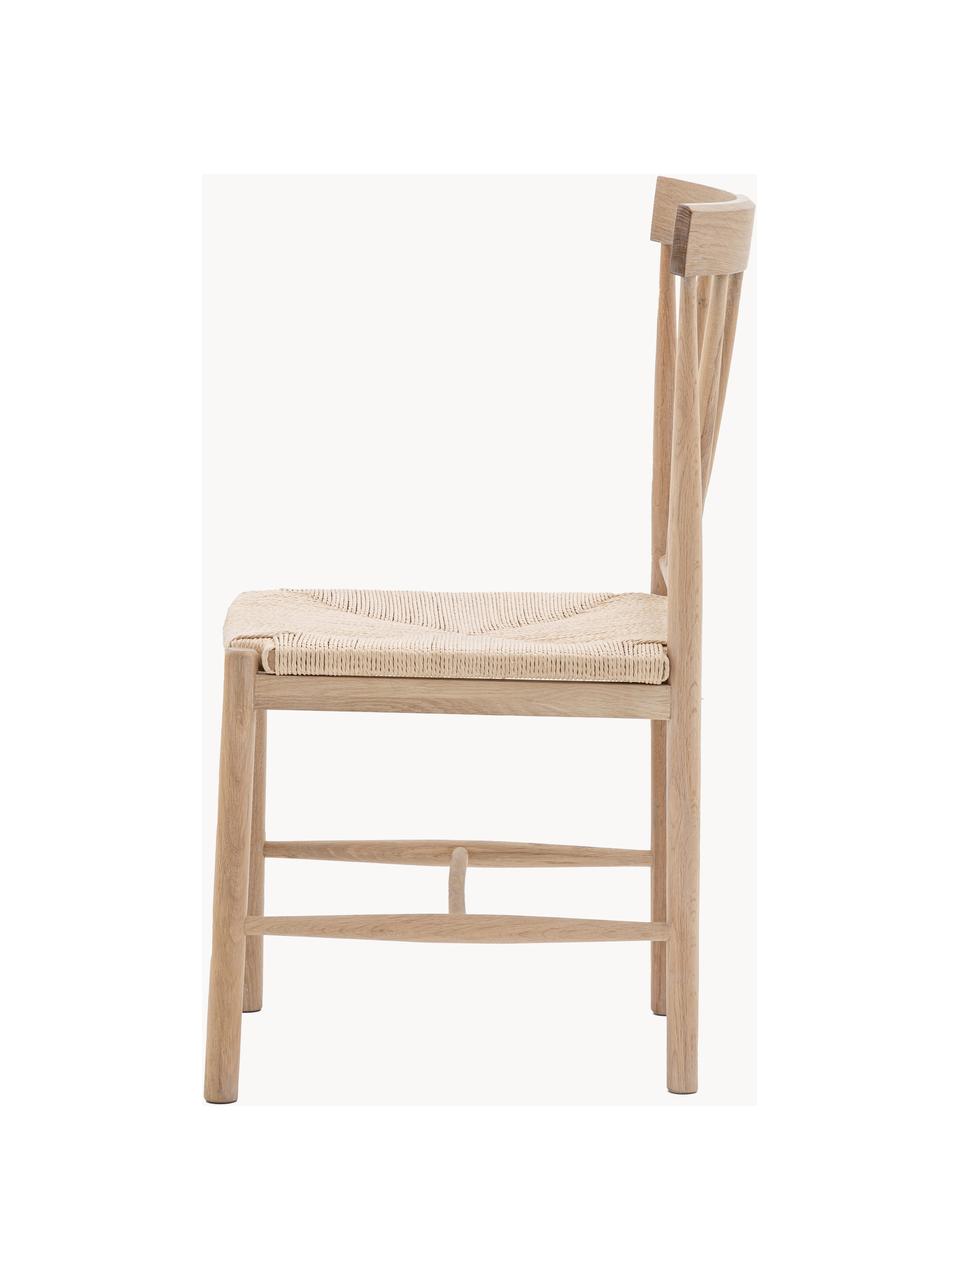 Handgefertigte Eichenholz-Stühle Eton, 2 Stück, Sitzfläche: Seil, Gestell: Eichenholz, Eichenholz, Hellbeige, B 46 x T 45 cm